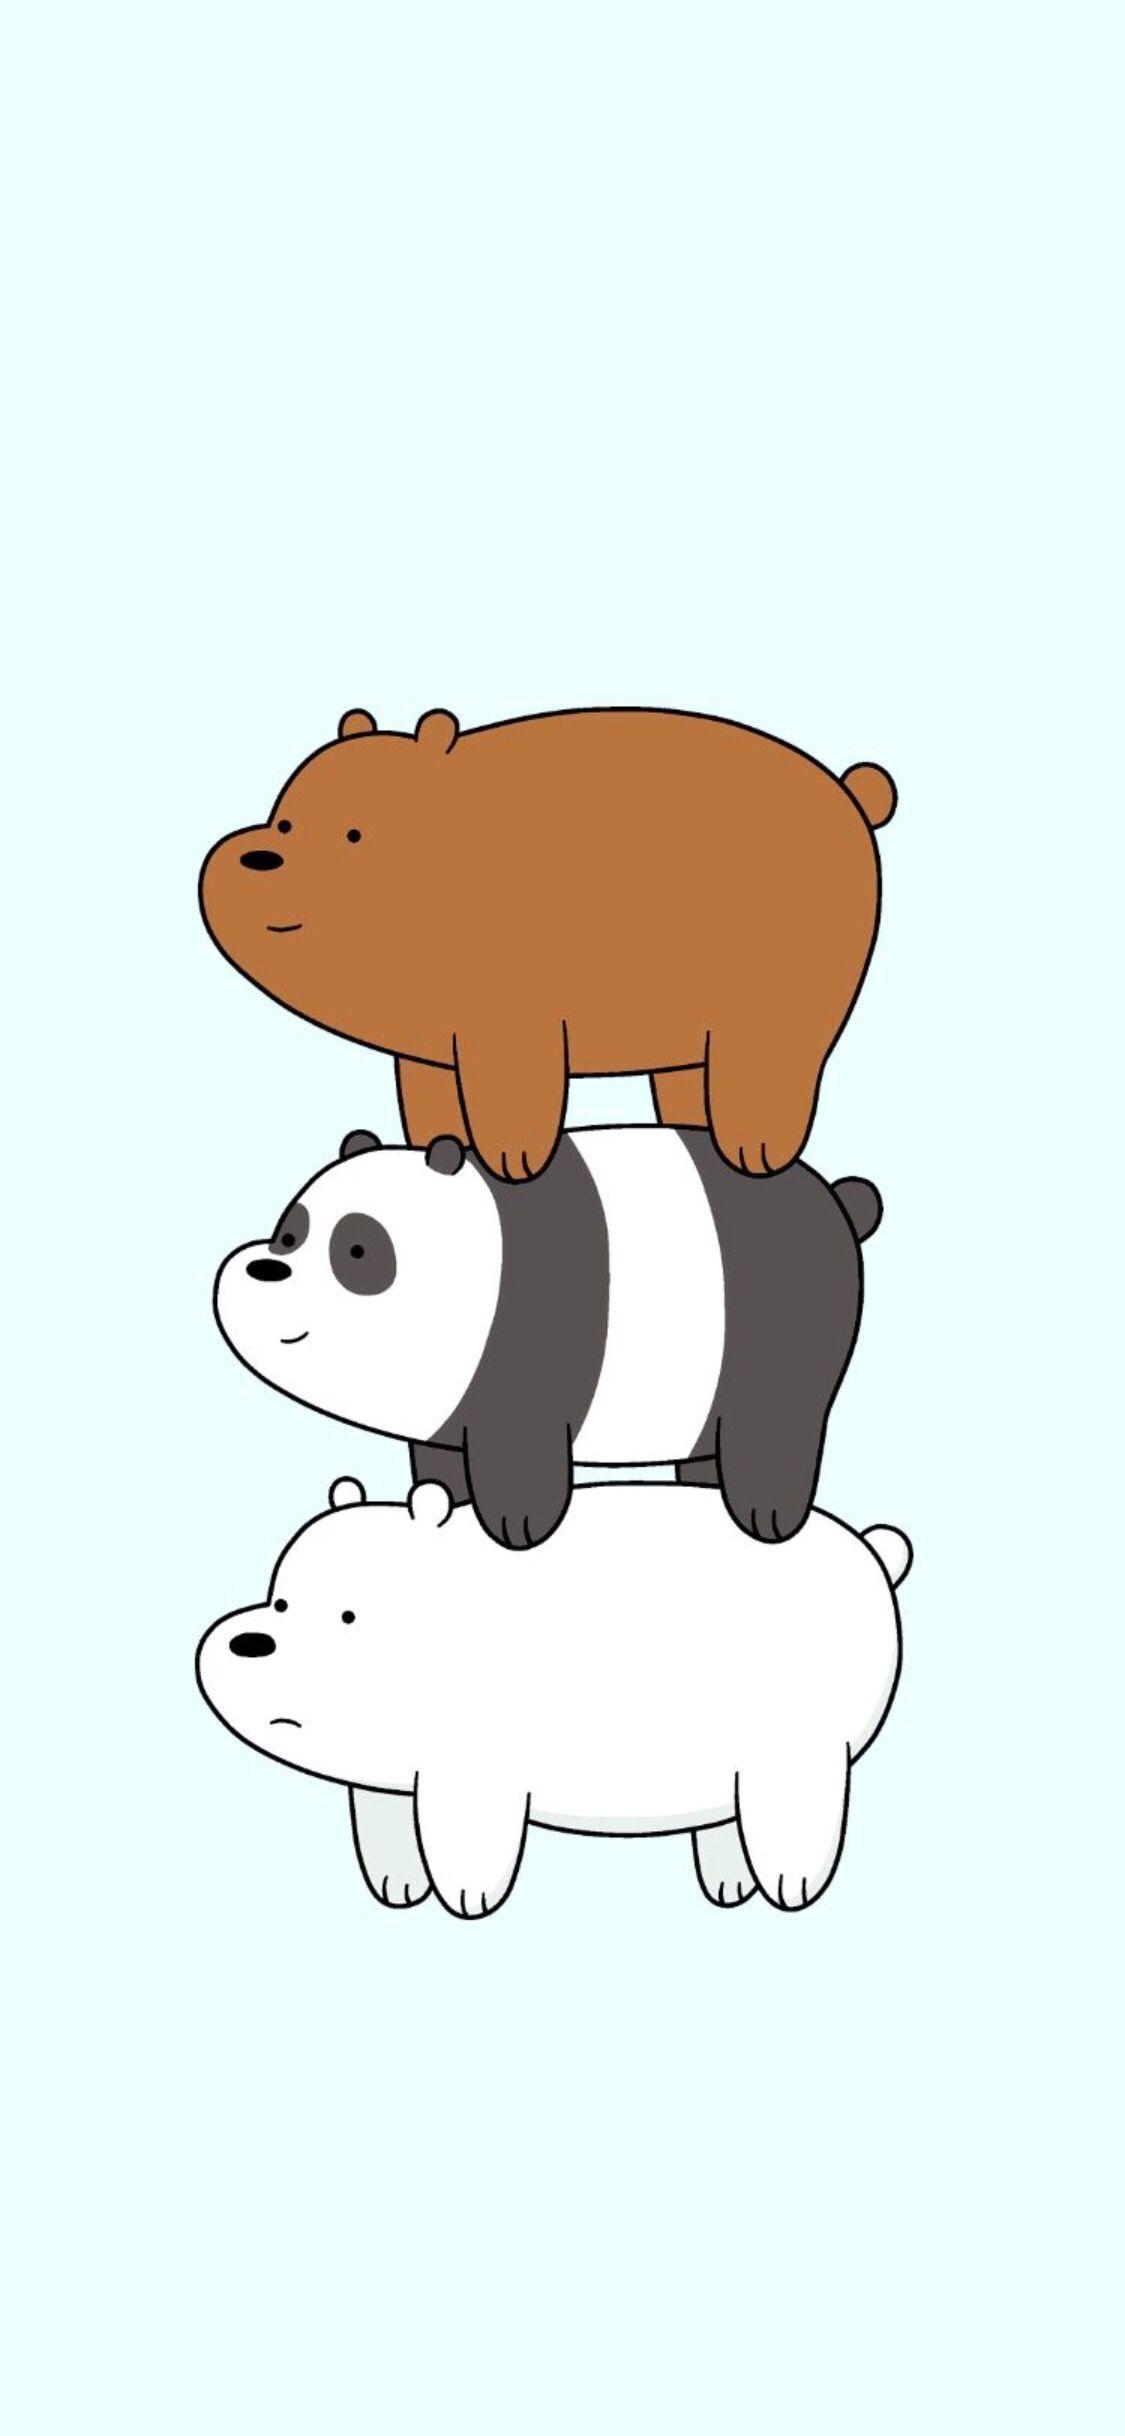 We Bare Bears for iPhone X. Kartun, Hewan, Beruang kutub